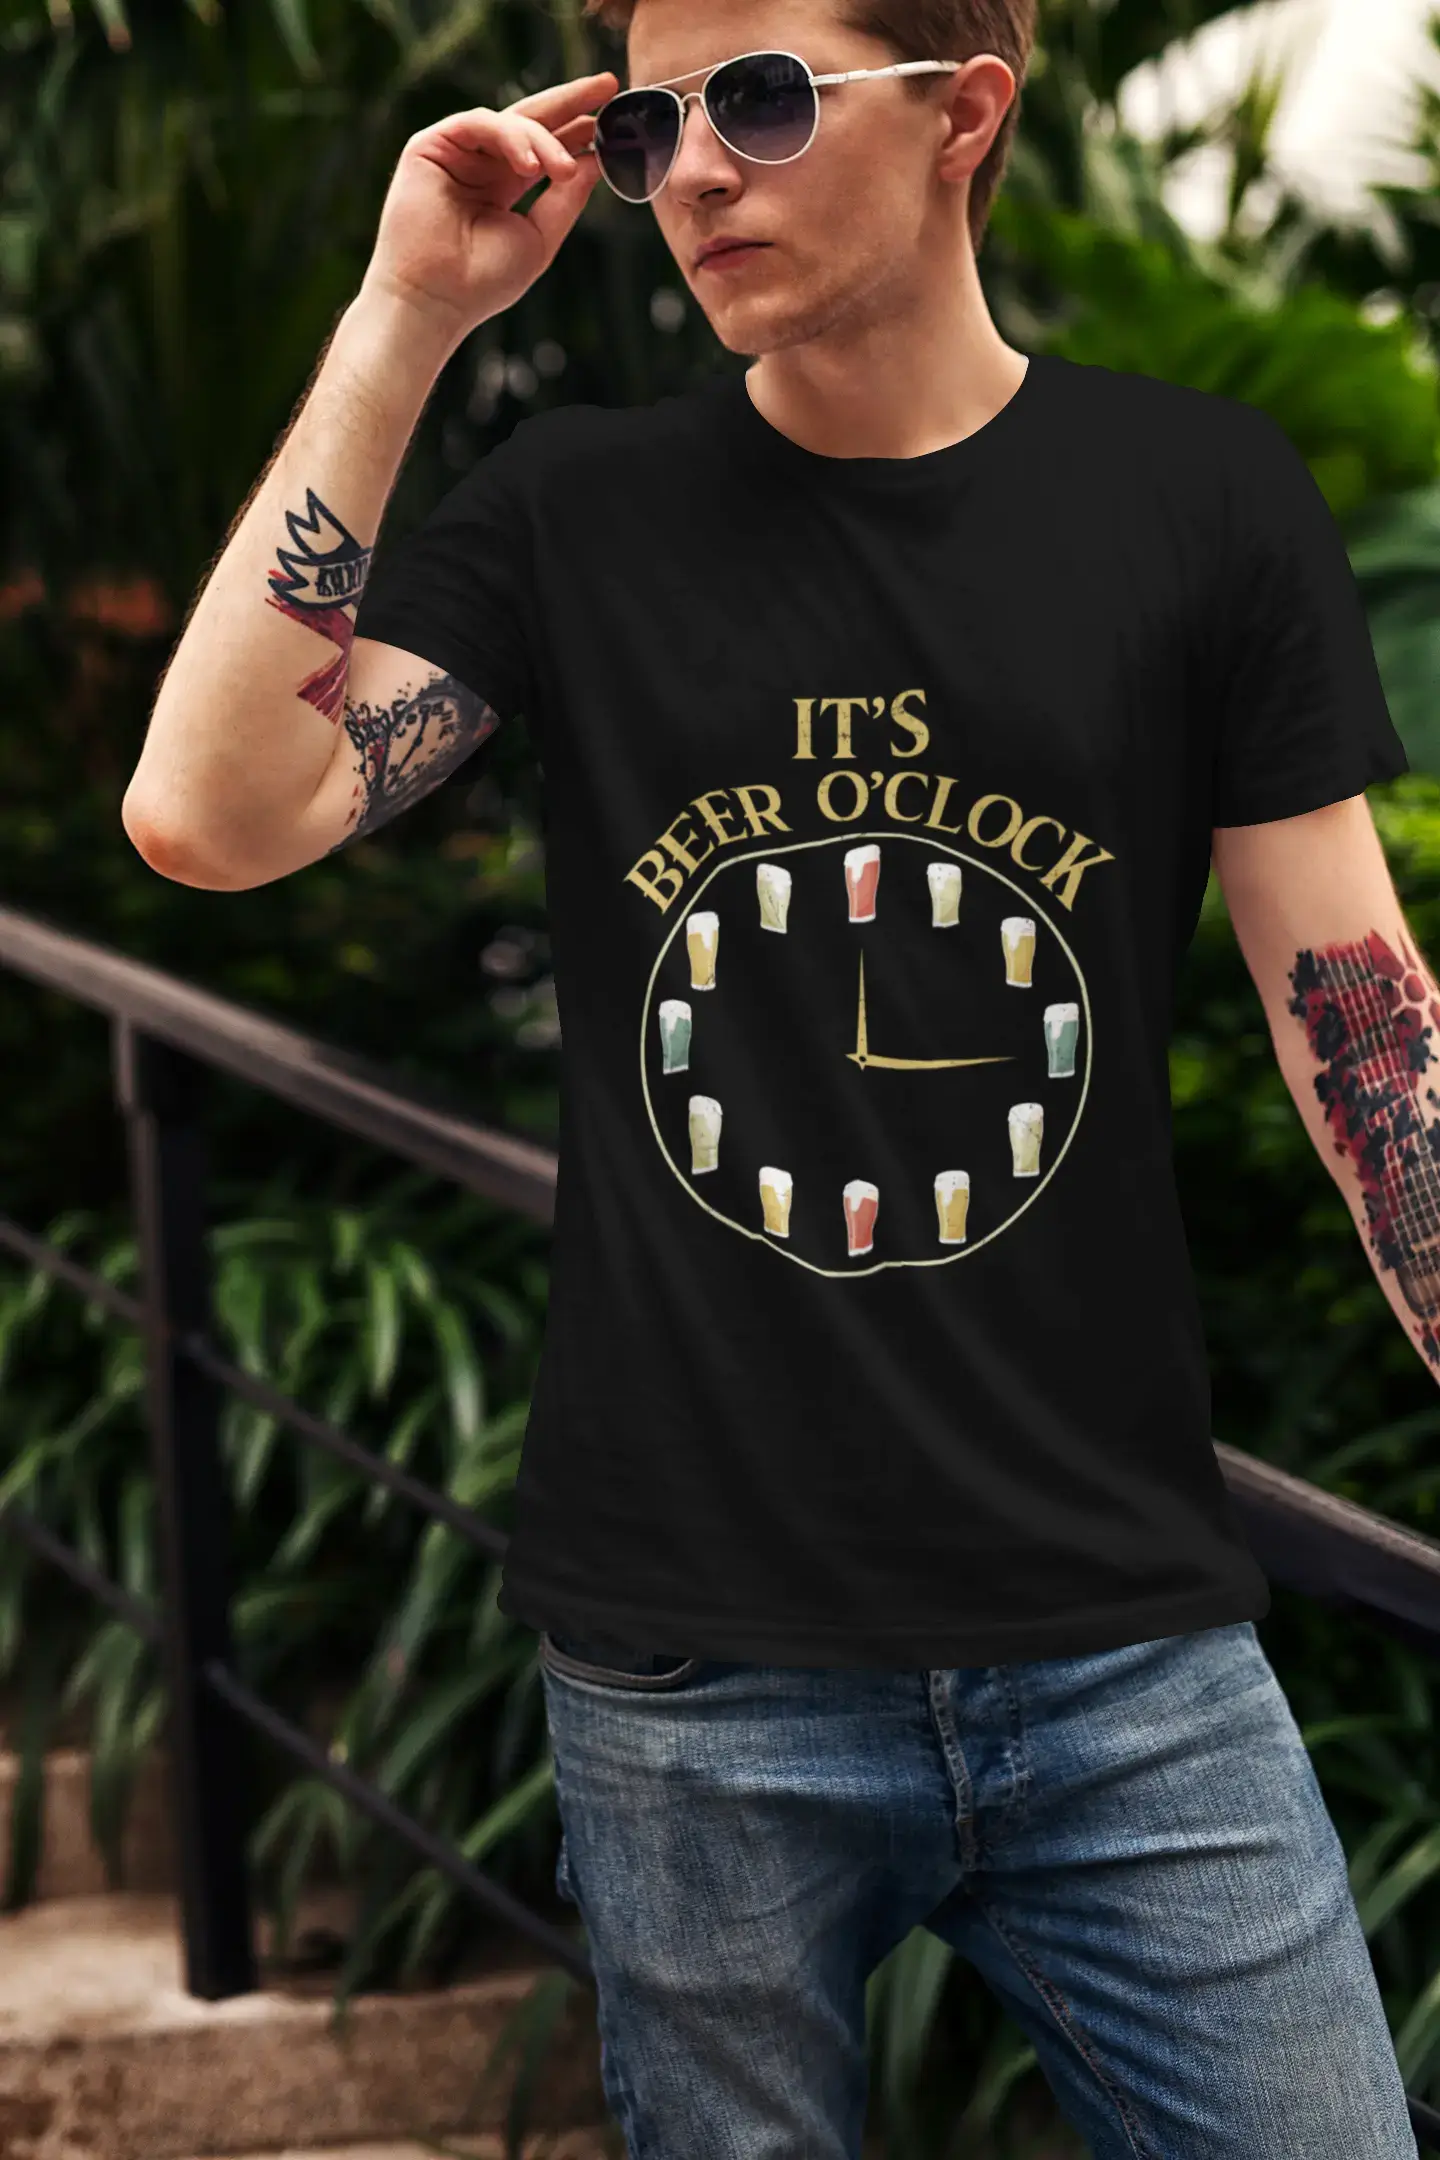 ULTRABASIC Men's Novelty T-Shirt It's Beer O'Clock - Funny Drinking Lover Slogan Tee Shirt